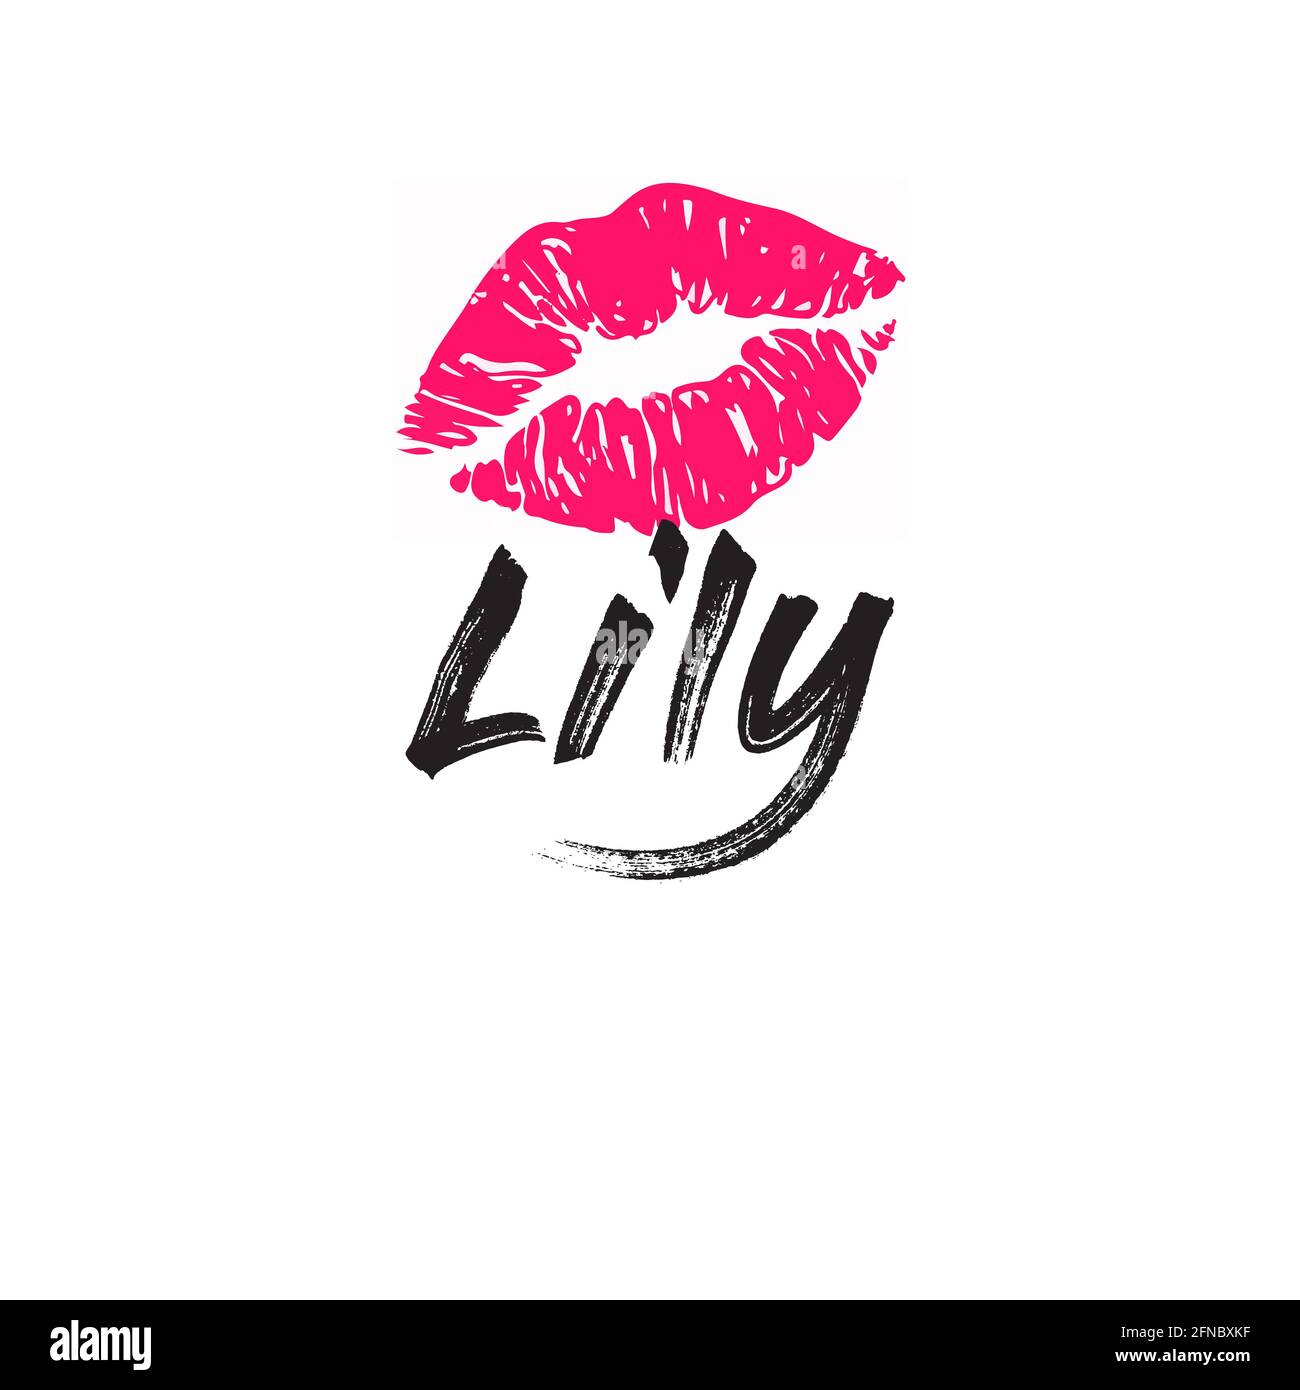 lily girl name Stock Photo